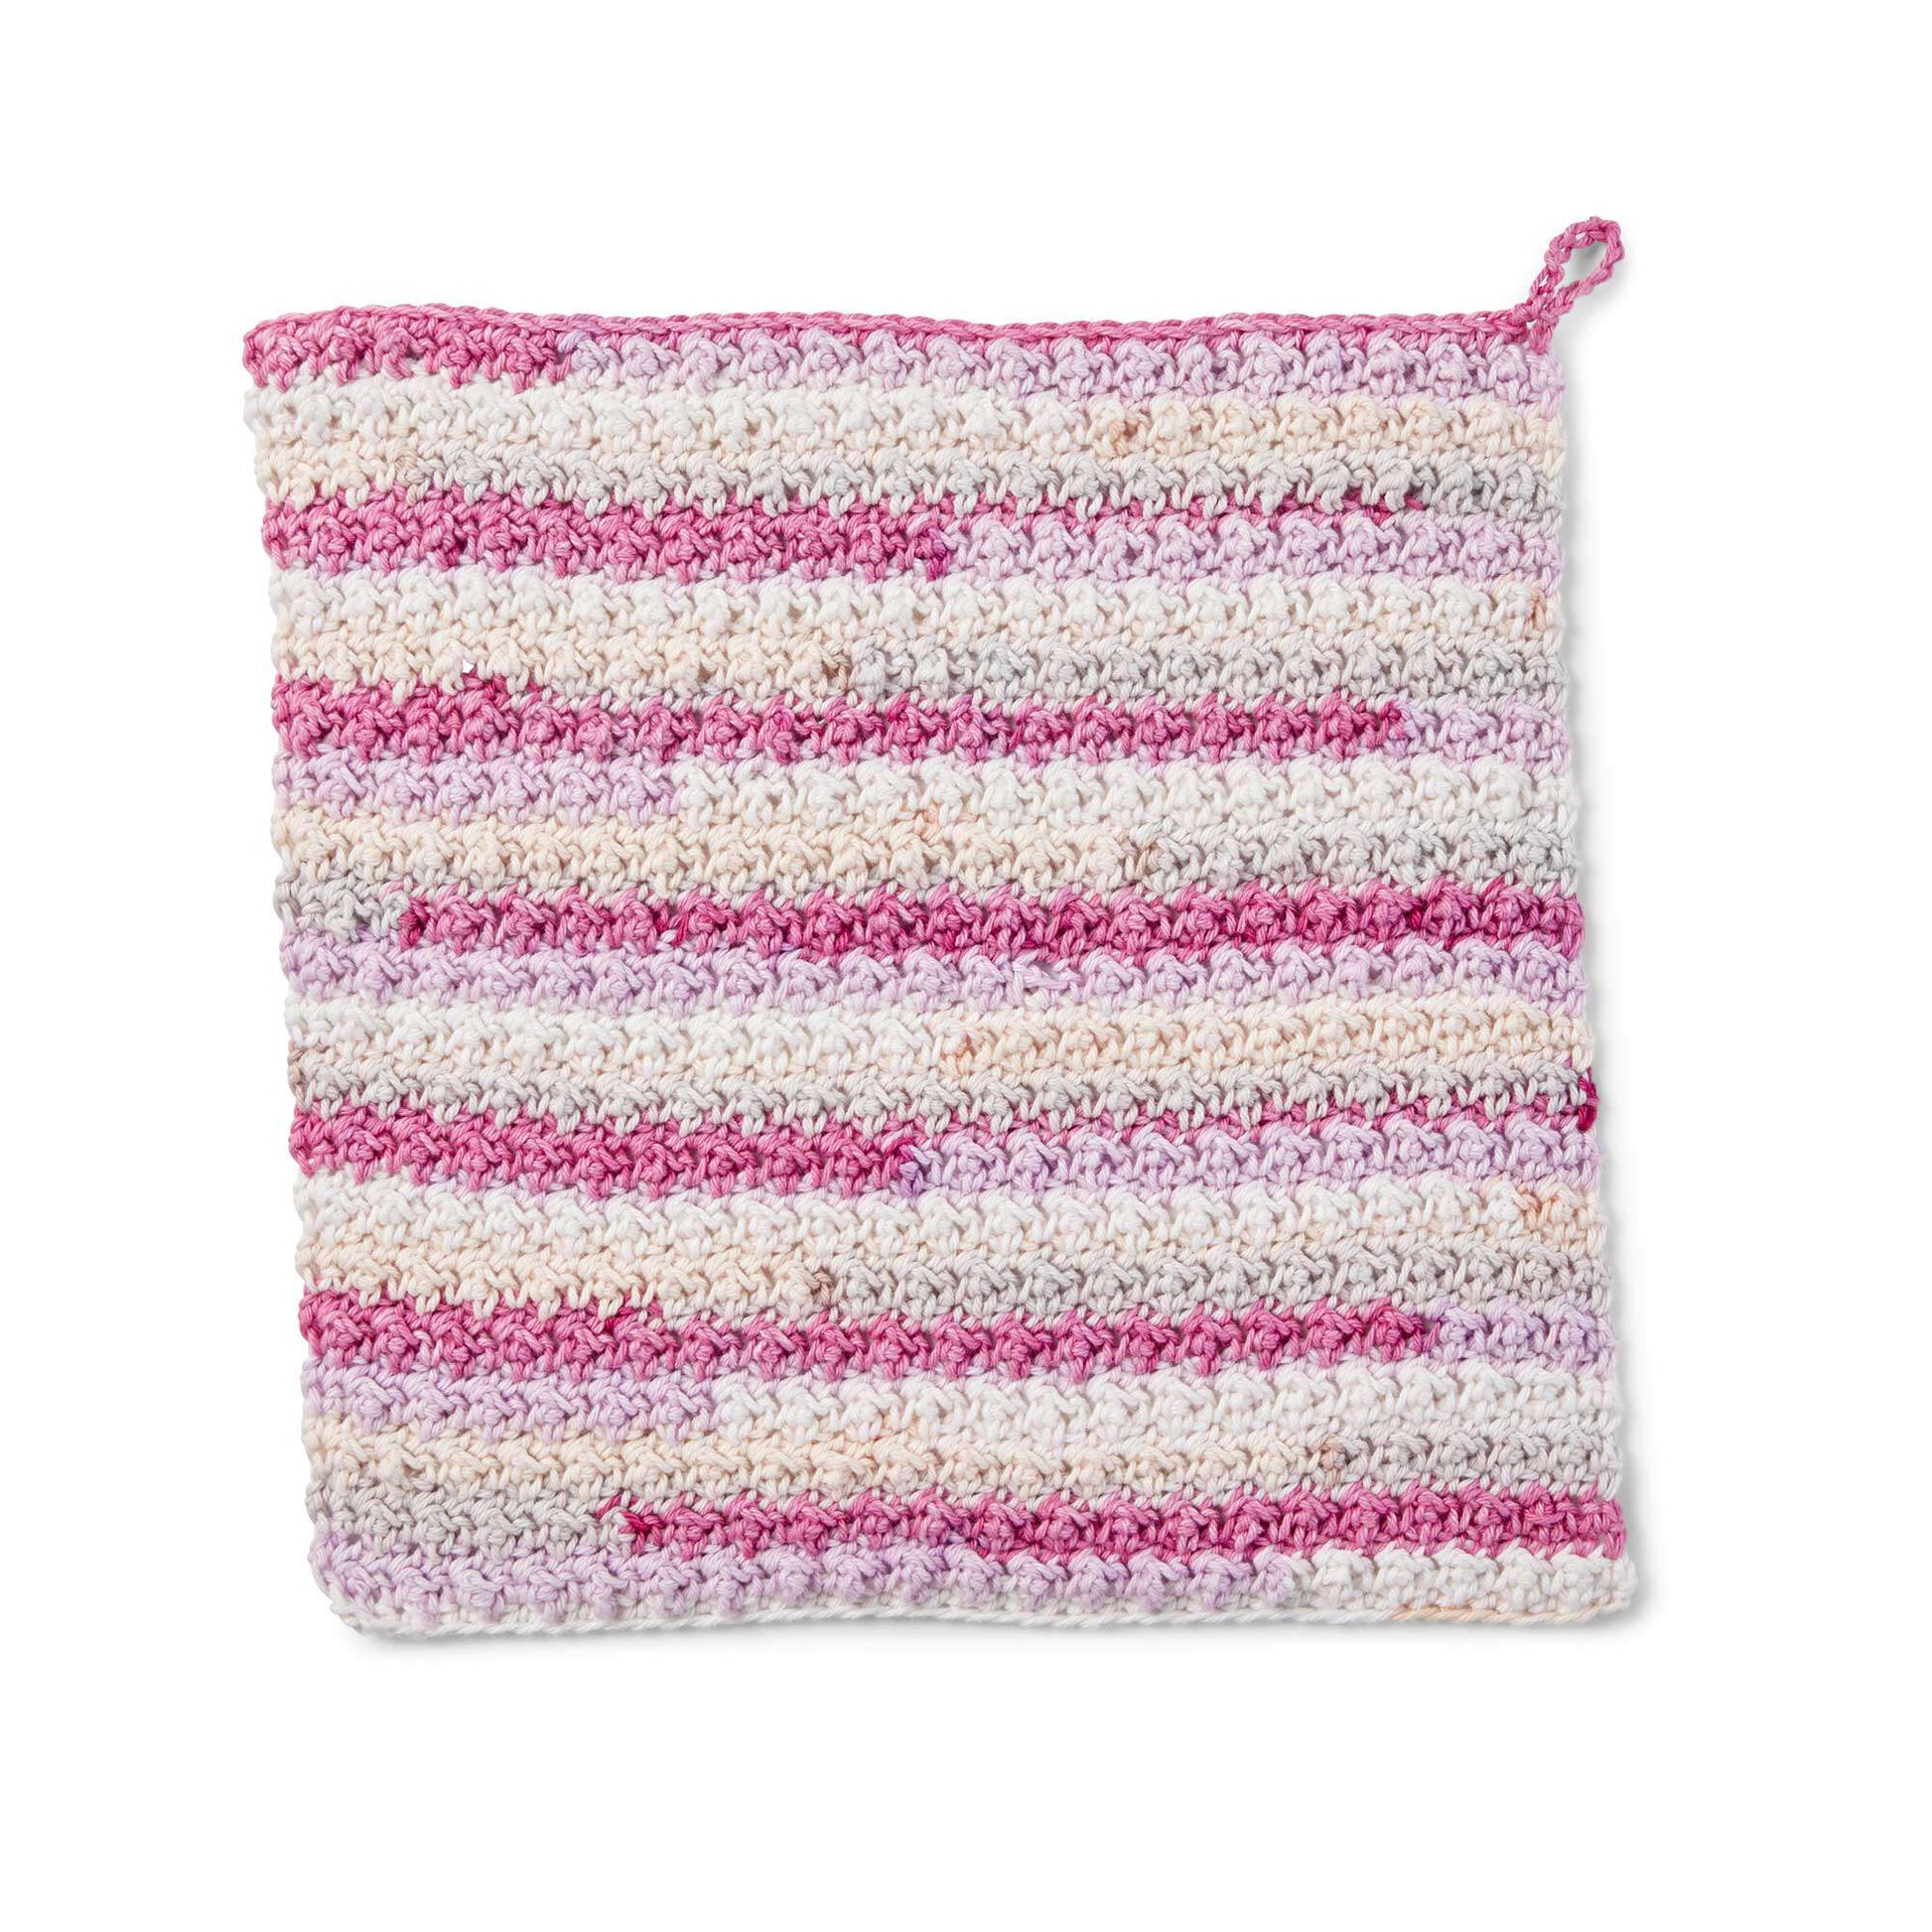 Peaches & Crème Easy Textures Crochet Dishcloth Single Size